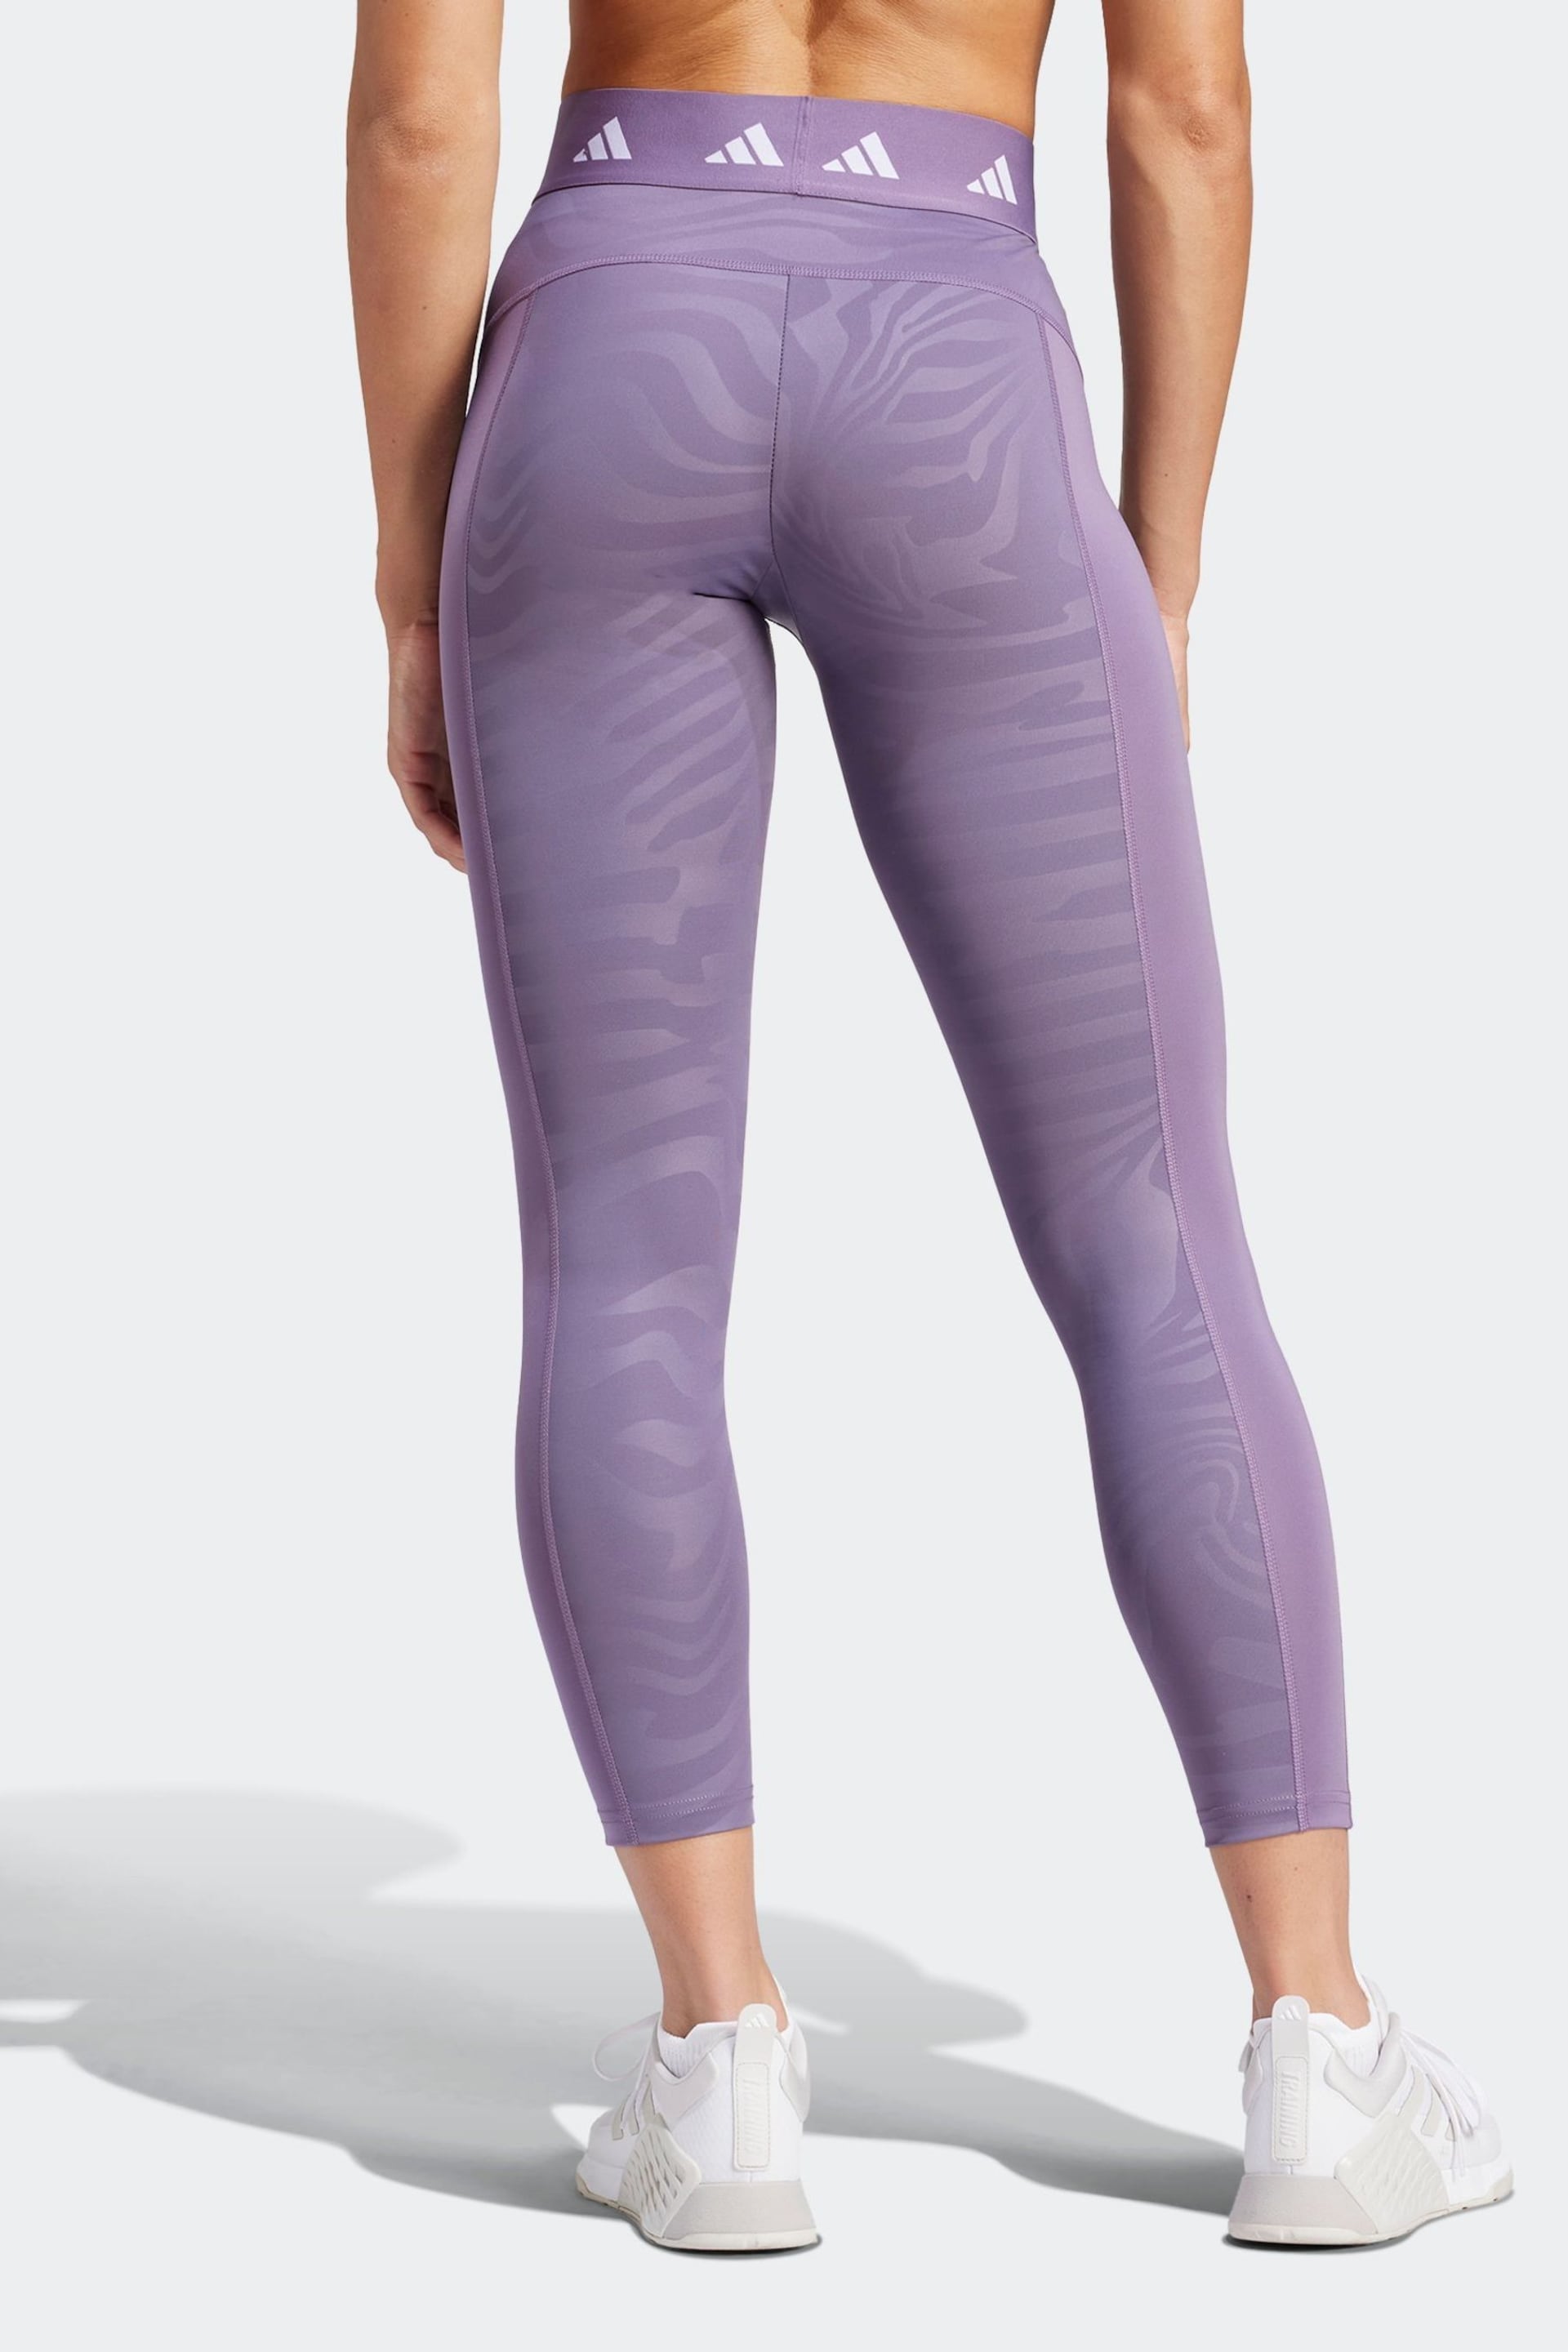 adidas Purple Techfit Printed 7/8 Leggings - Image 2 of 8